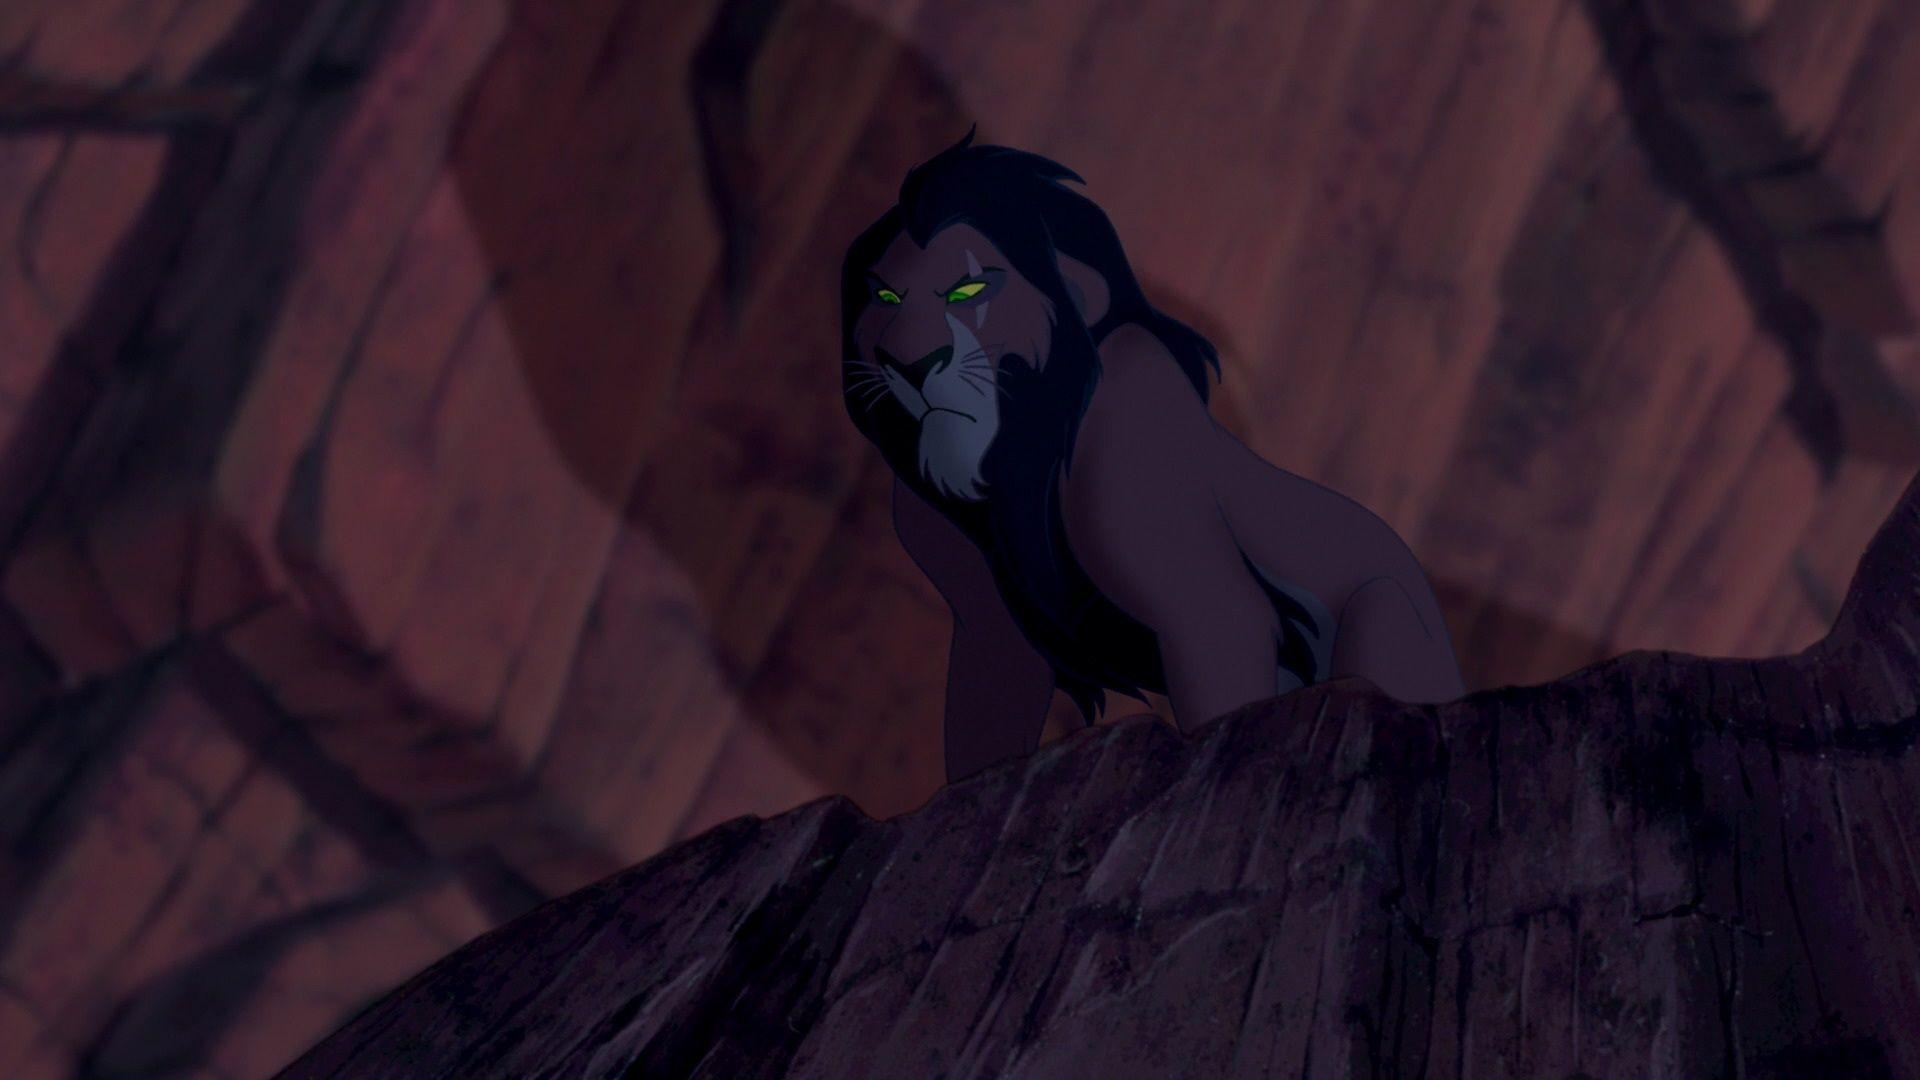 best The Lion King image. The lion king, Disney